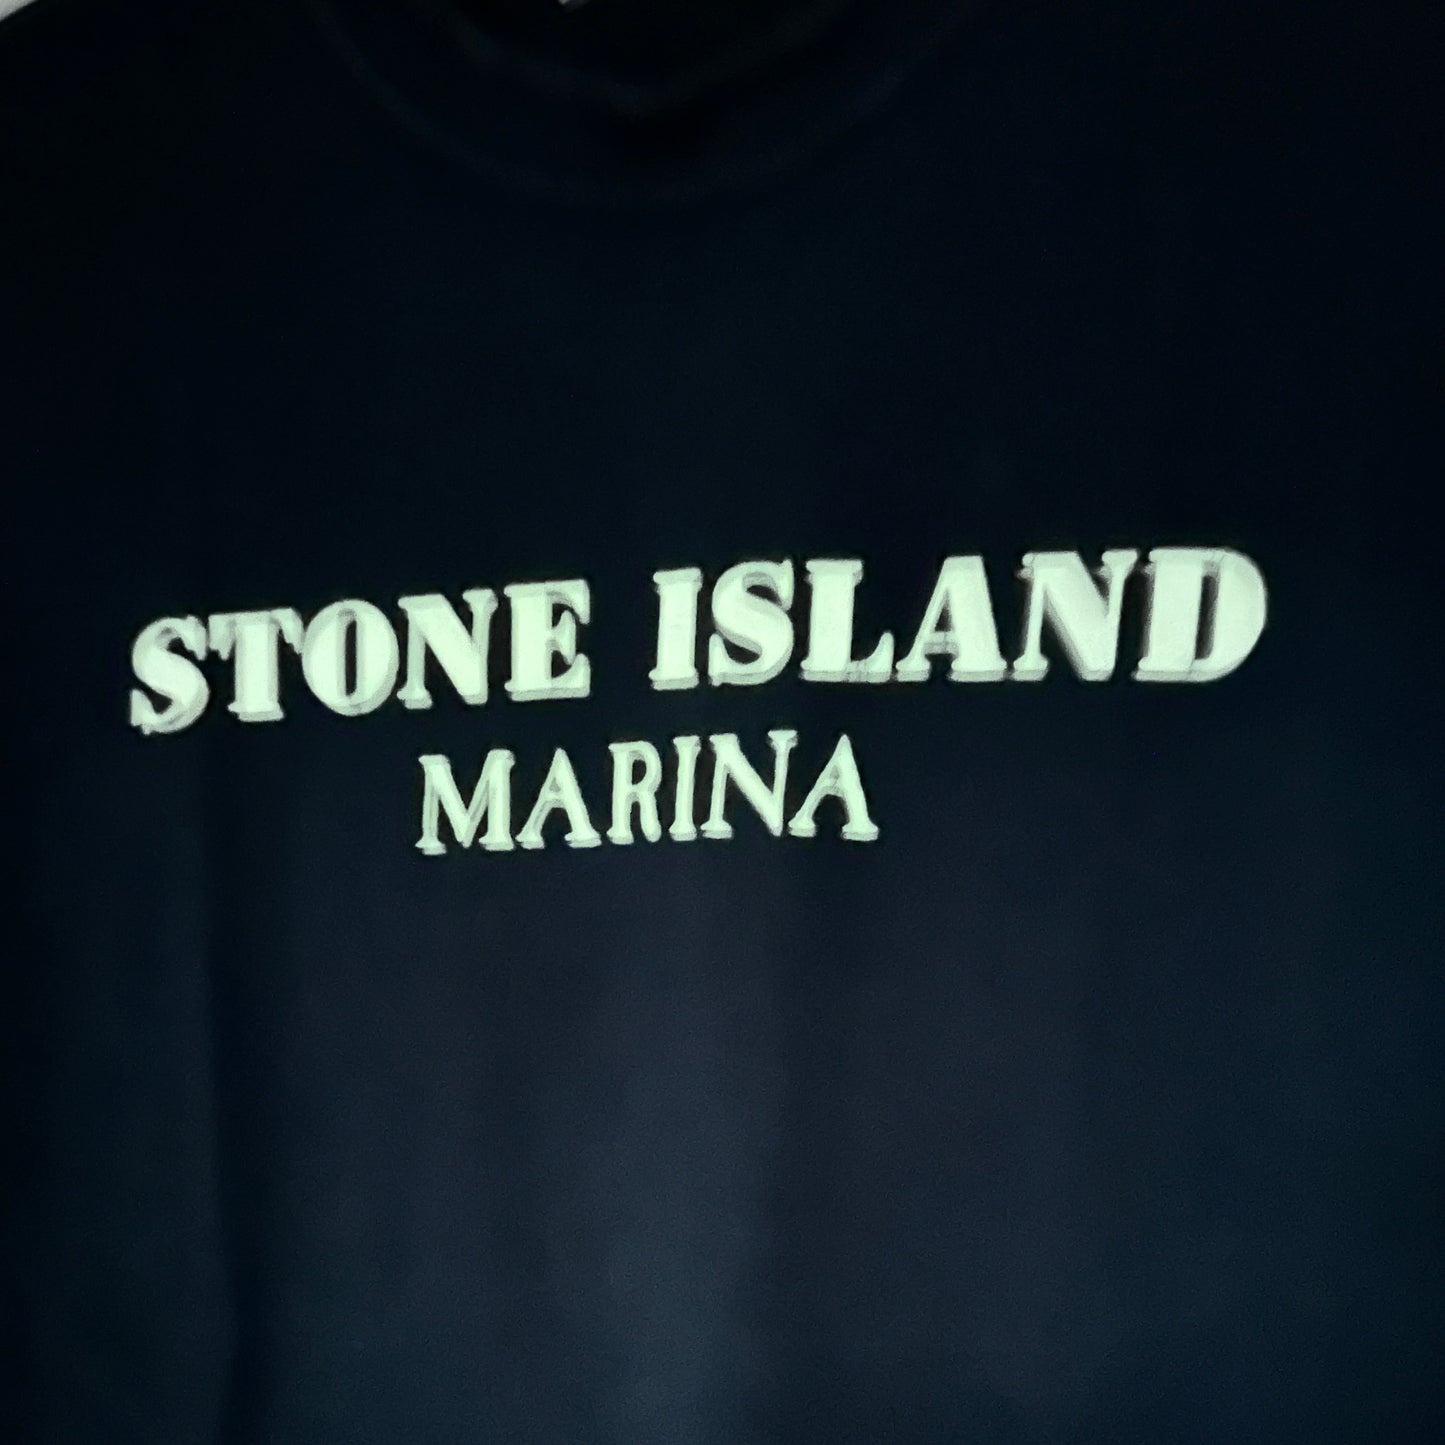 Stone Island Marina 2014 Glow in the Dark Print T-Shirt - L - Made in Italy